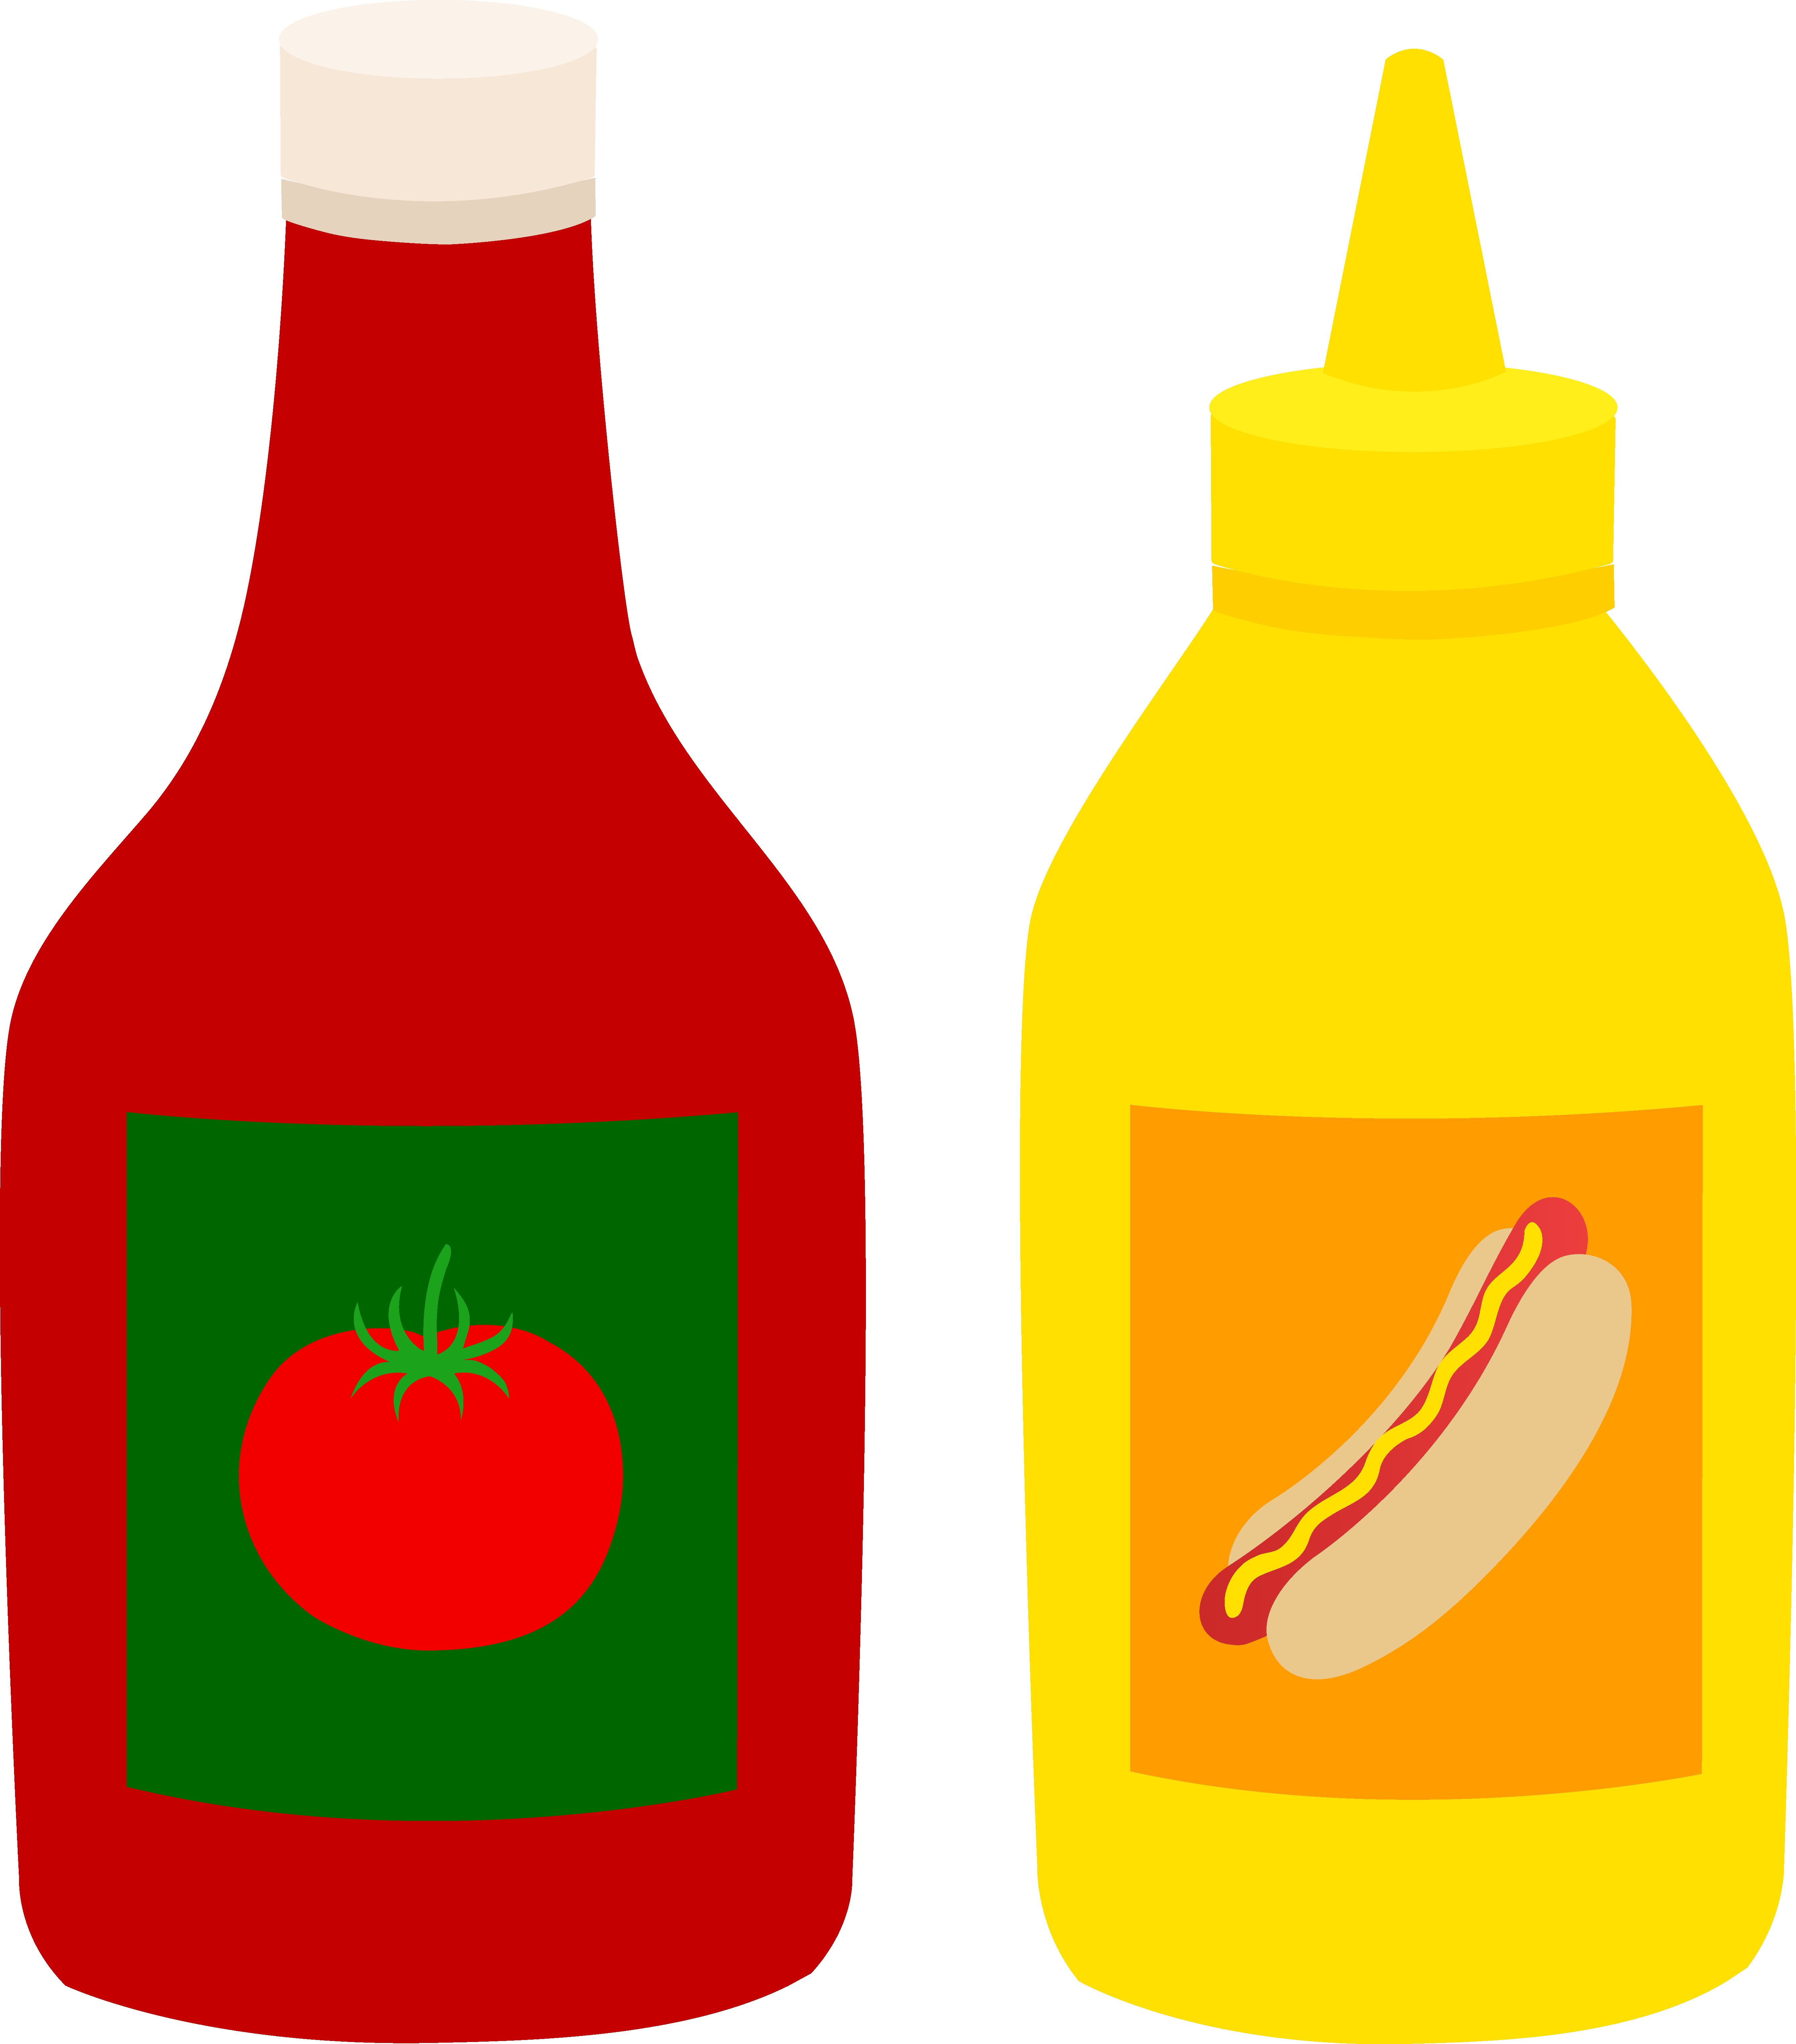 ketchup and mustard bottles c